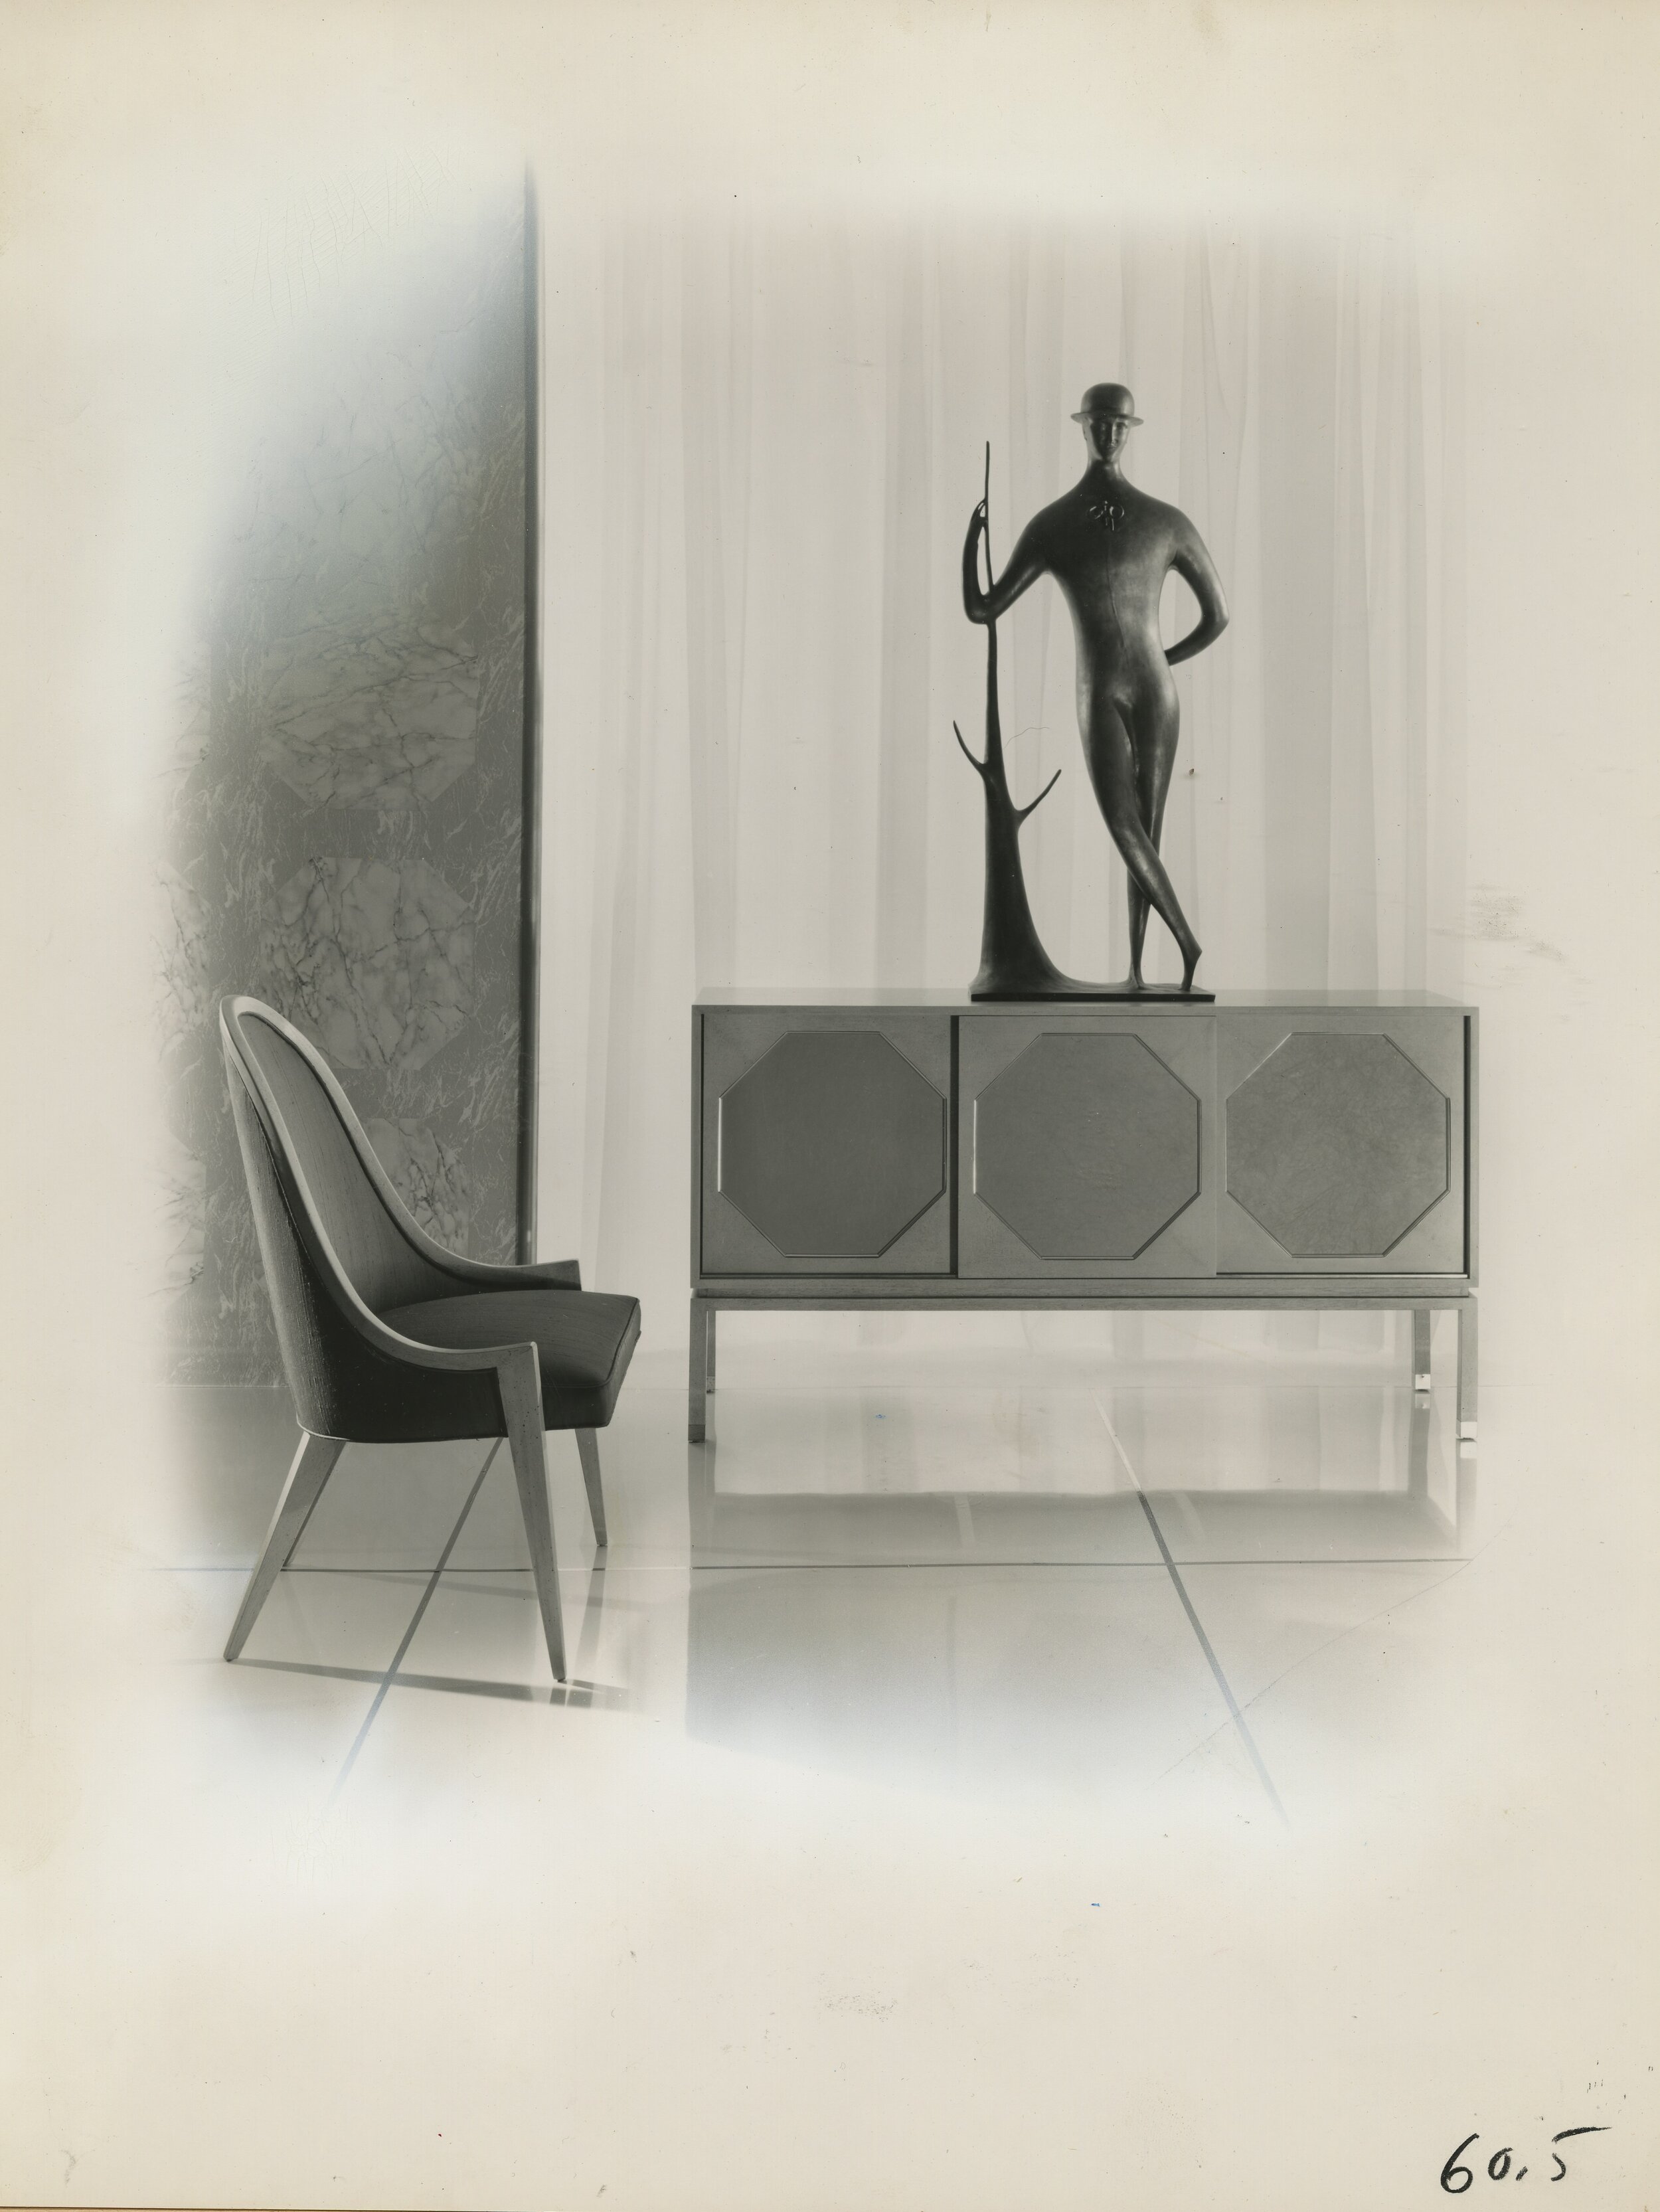 Harvey Probber furniture in D&amp;D Building showroom, with Elie Nadelman sculpture, c. 1952.